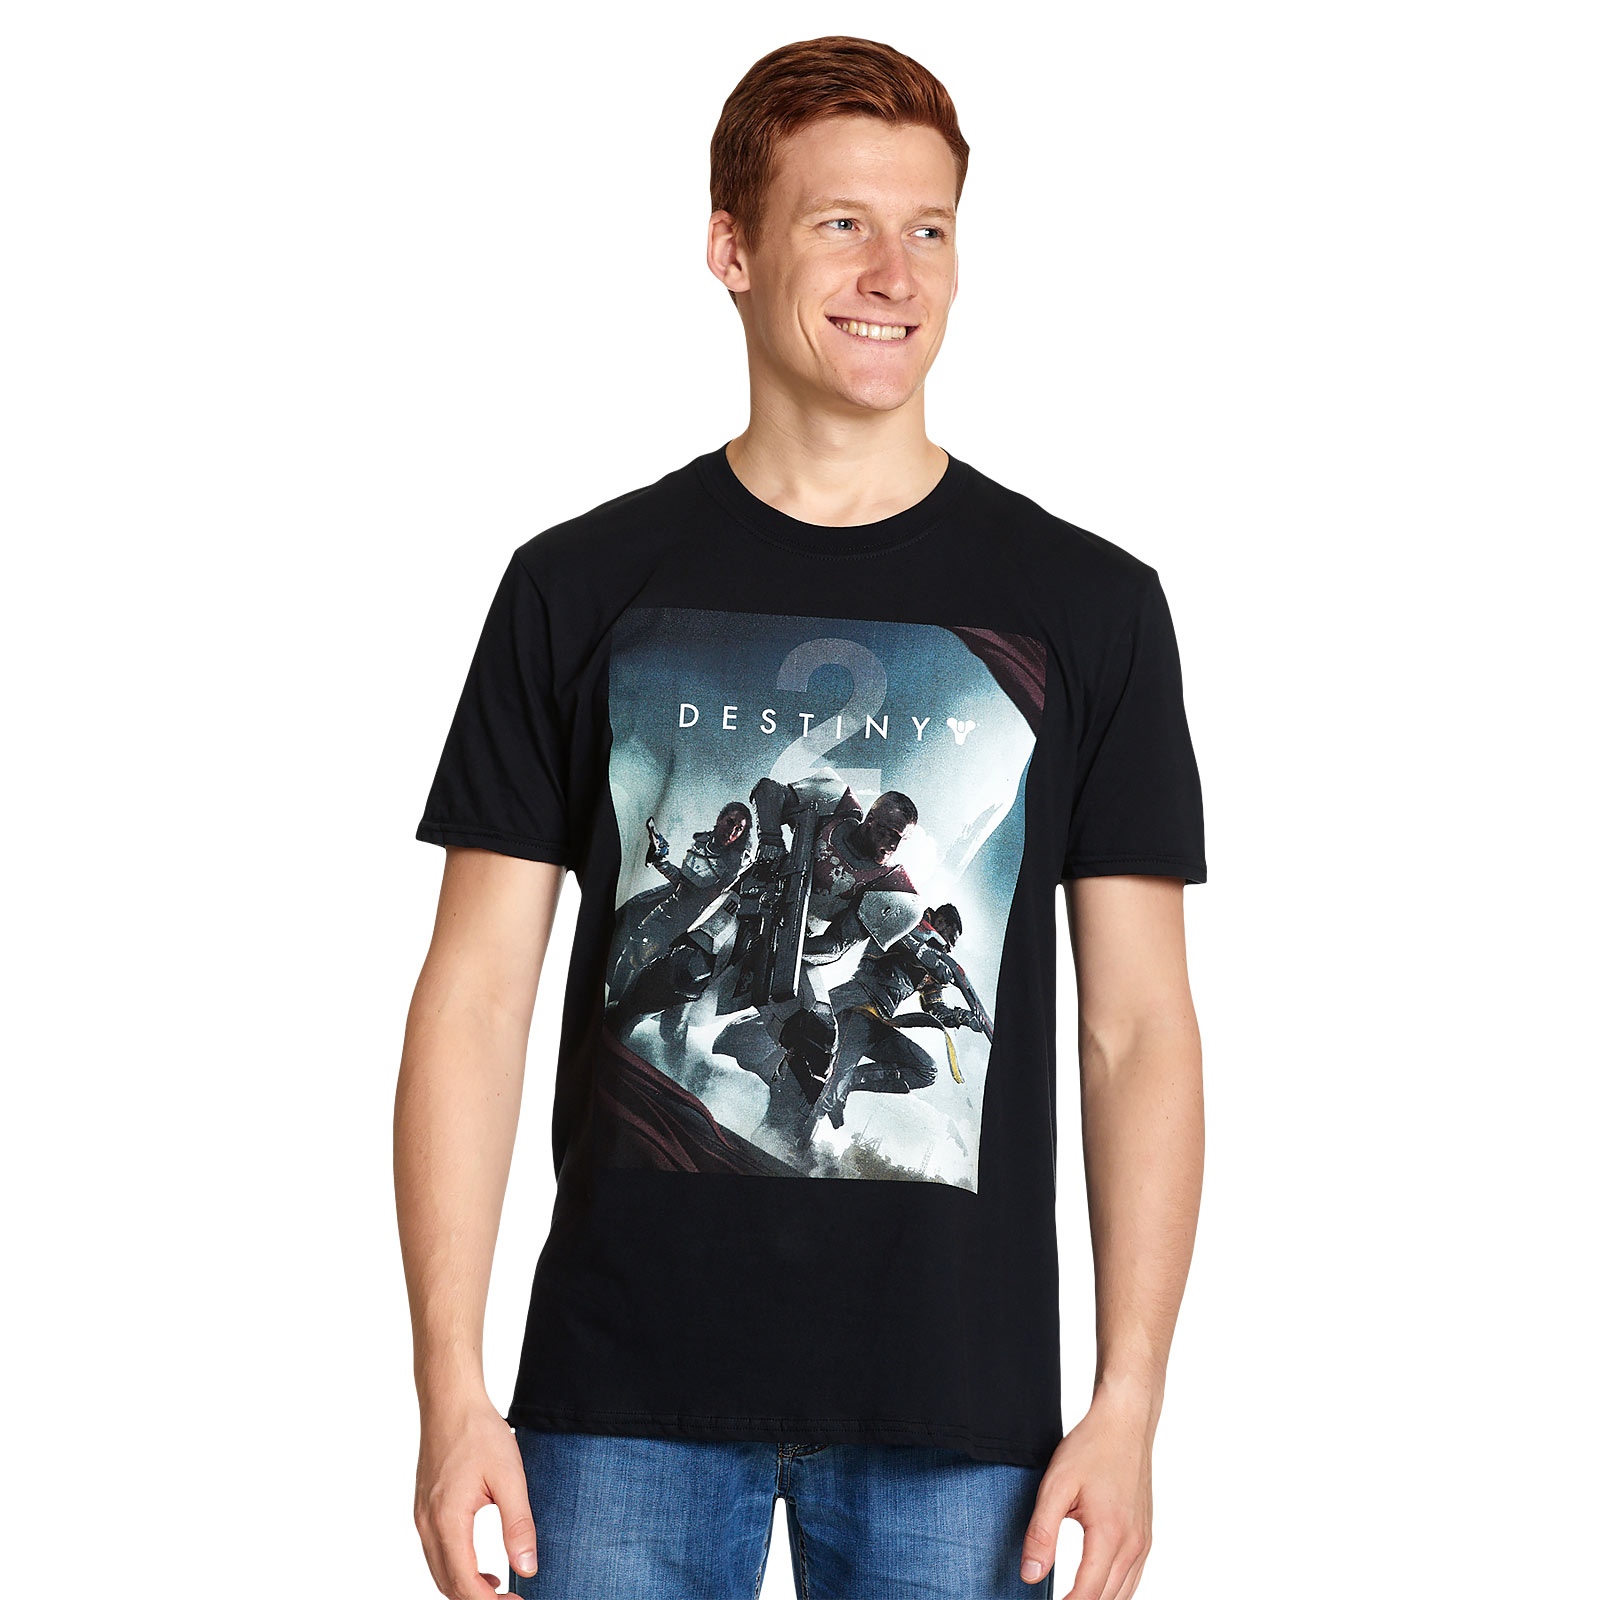 Destiny - Shooter T-Shirt Black